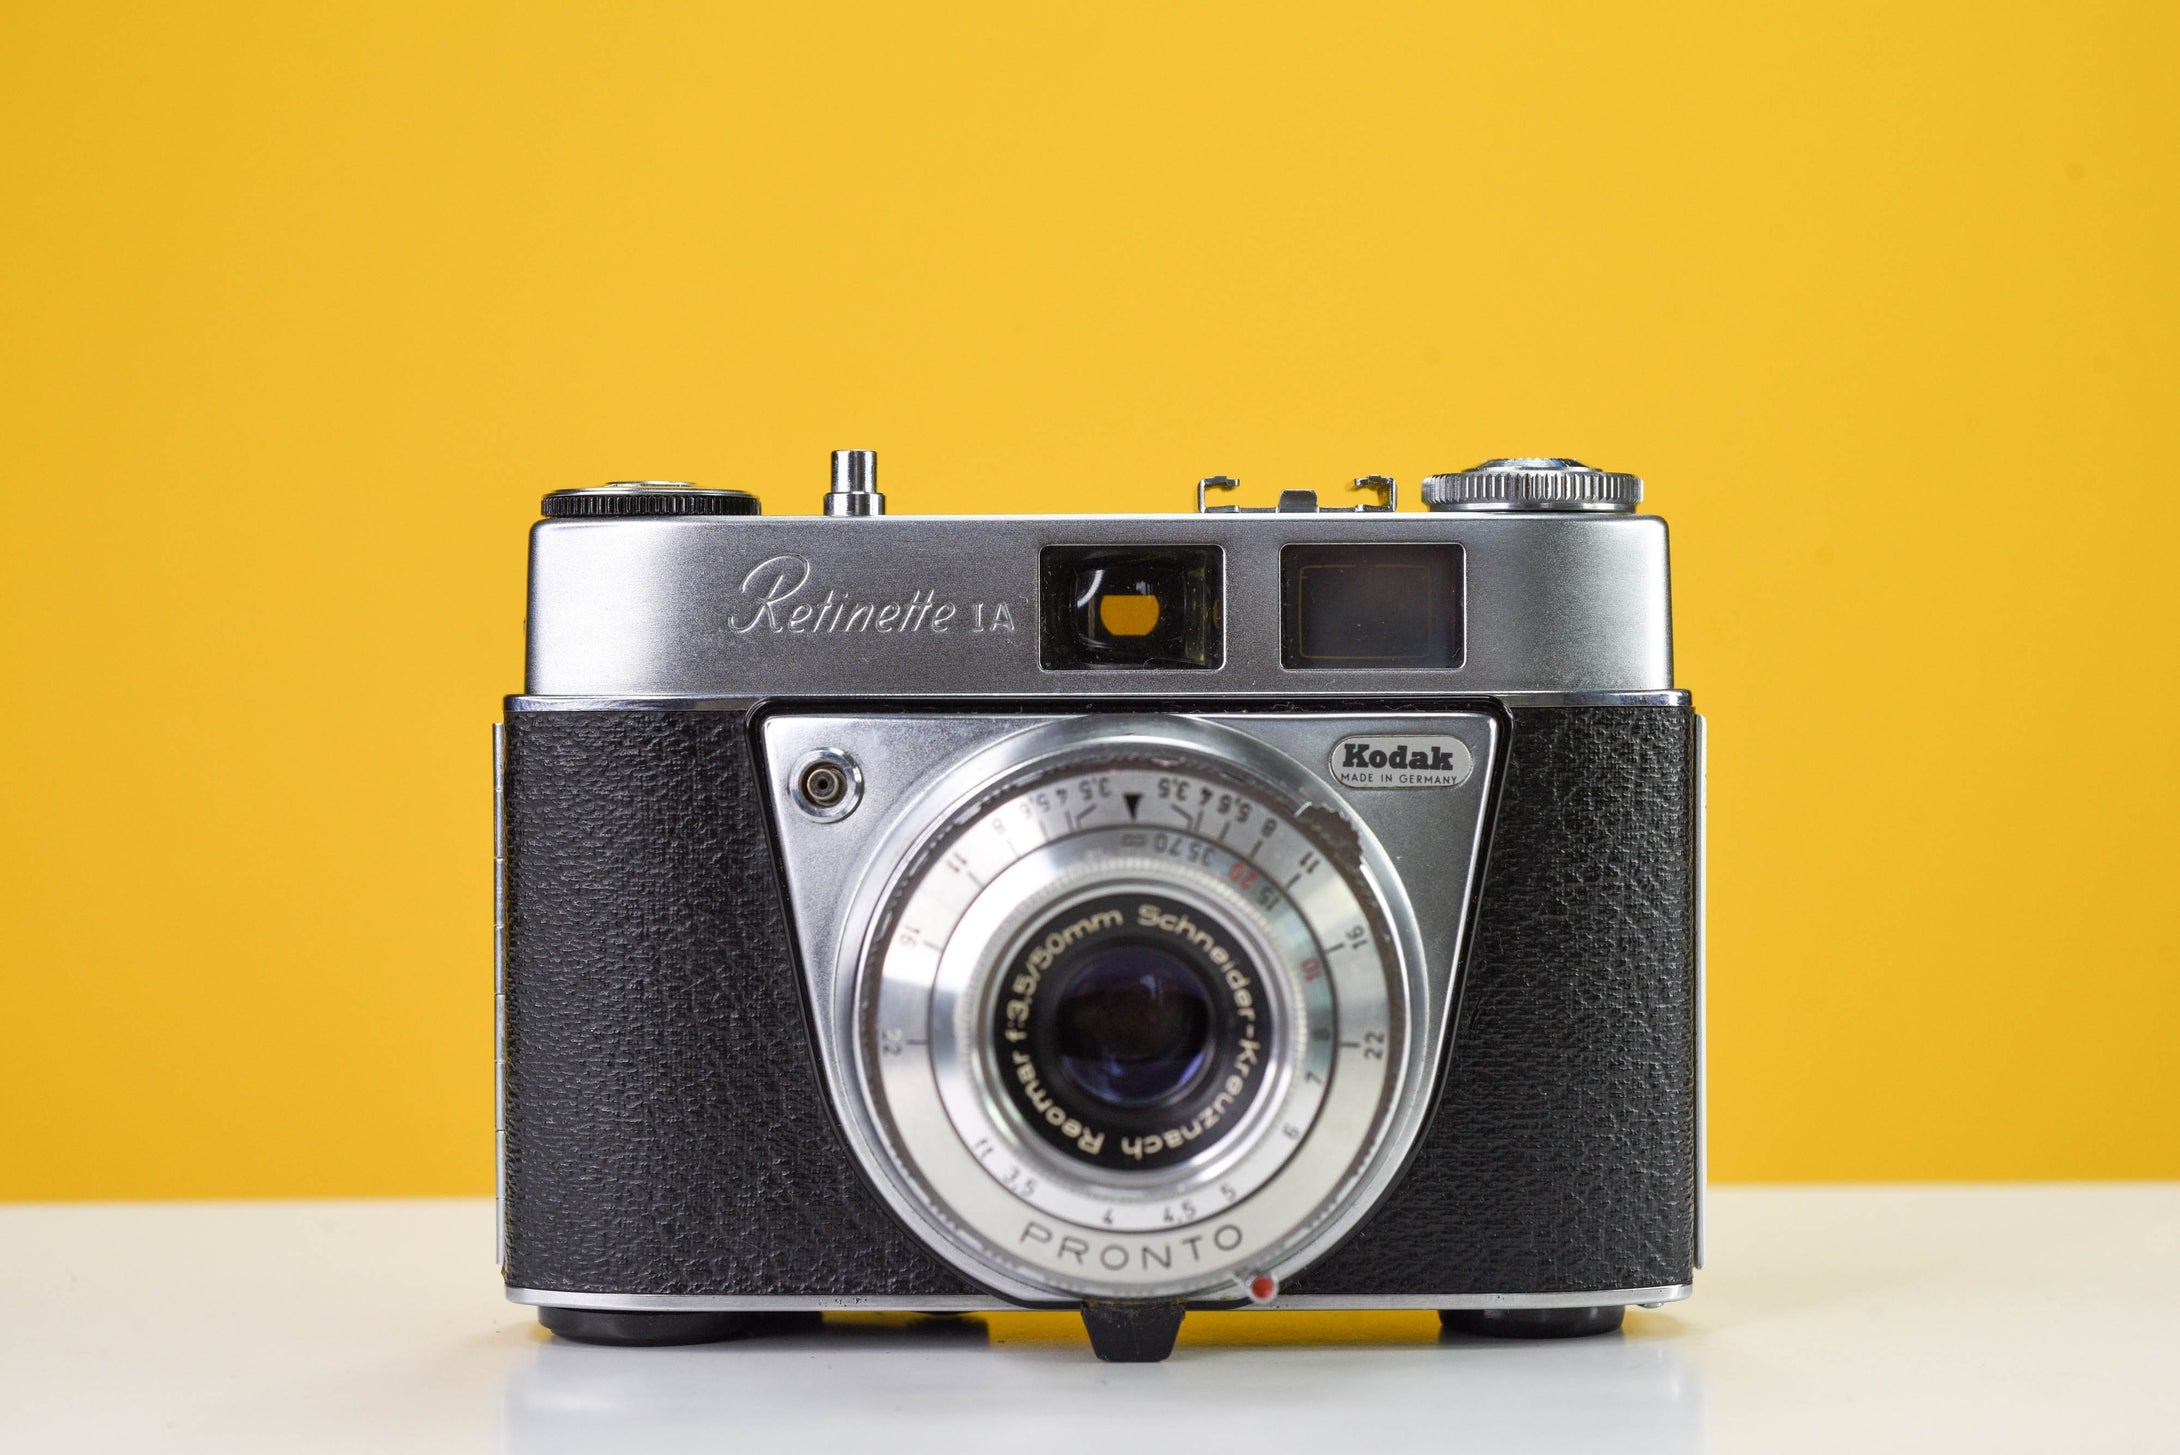 Kodak Retinette 1A Type 042 35mm Viewfinder Film Camera